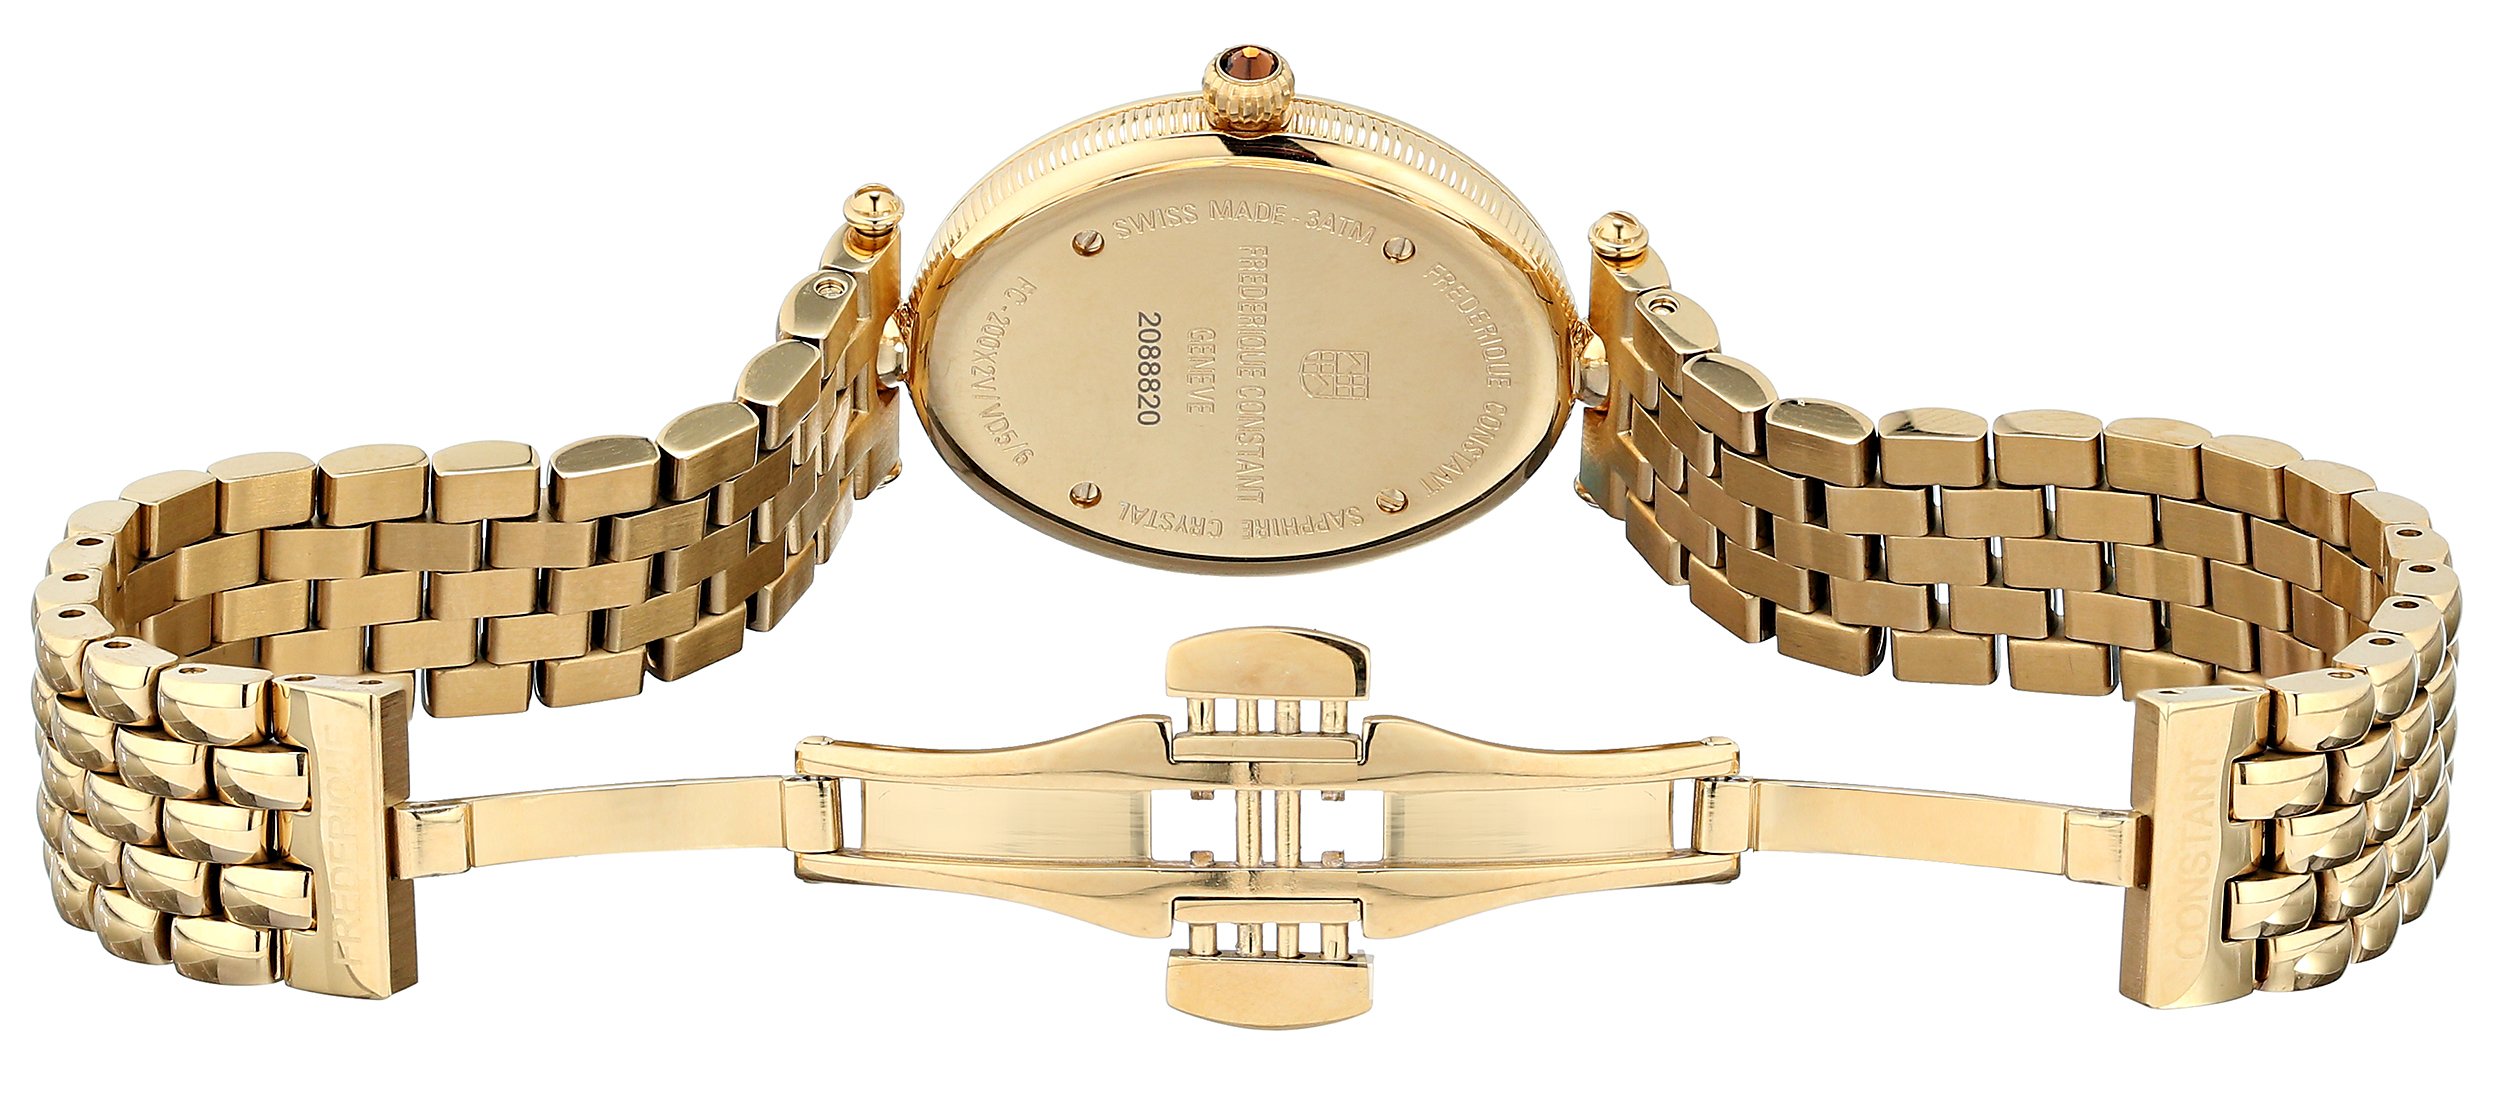 Frederique Constant Women's FC-200MPW2V5B Art Deco Classics Analog Display Swiss Quartz Gold Watch